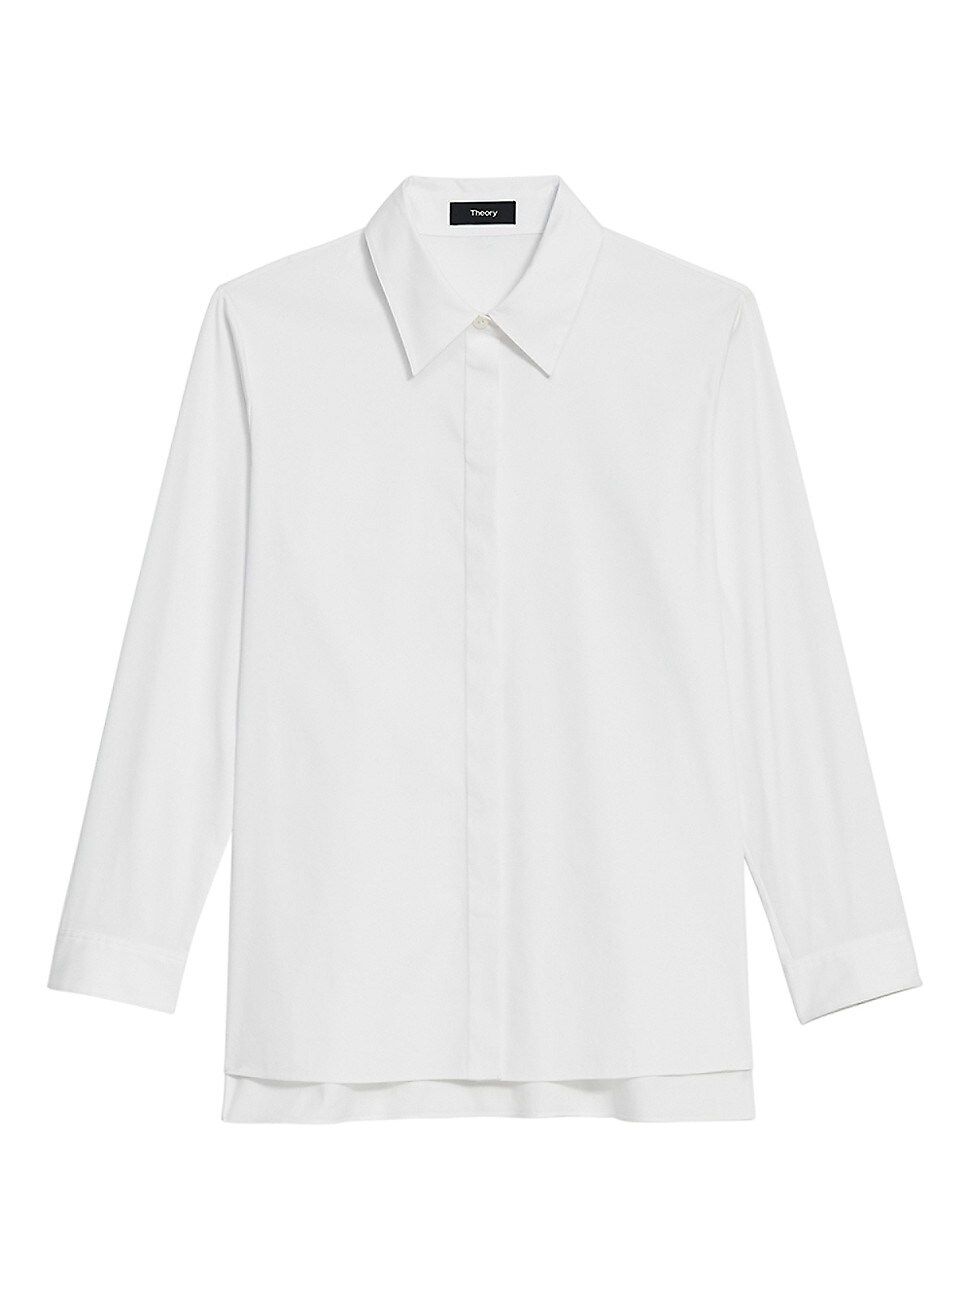 Theory Women's Trapeze Shirt - White - Size XS | Saks Fifth Avenue